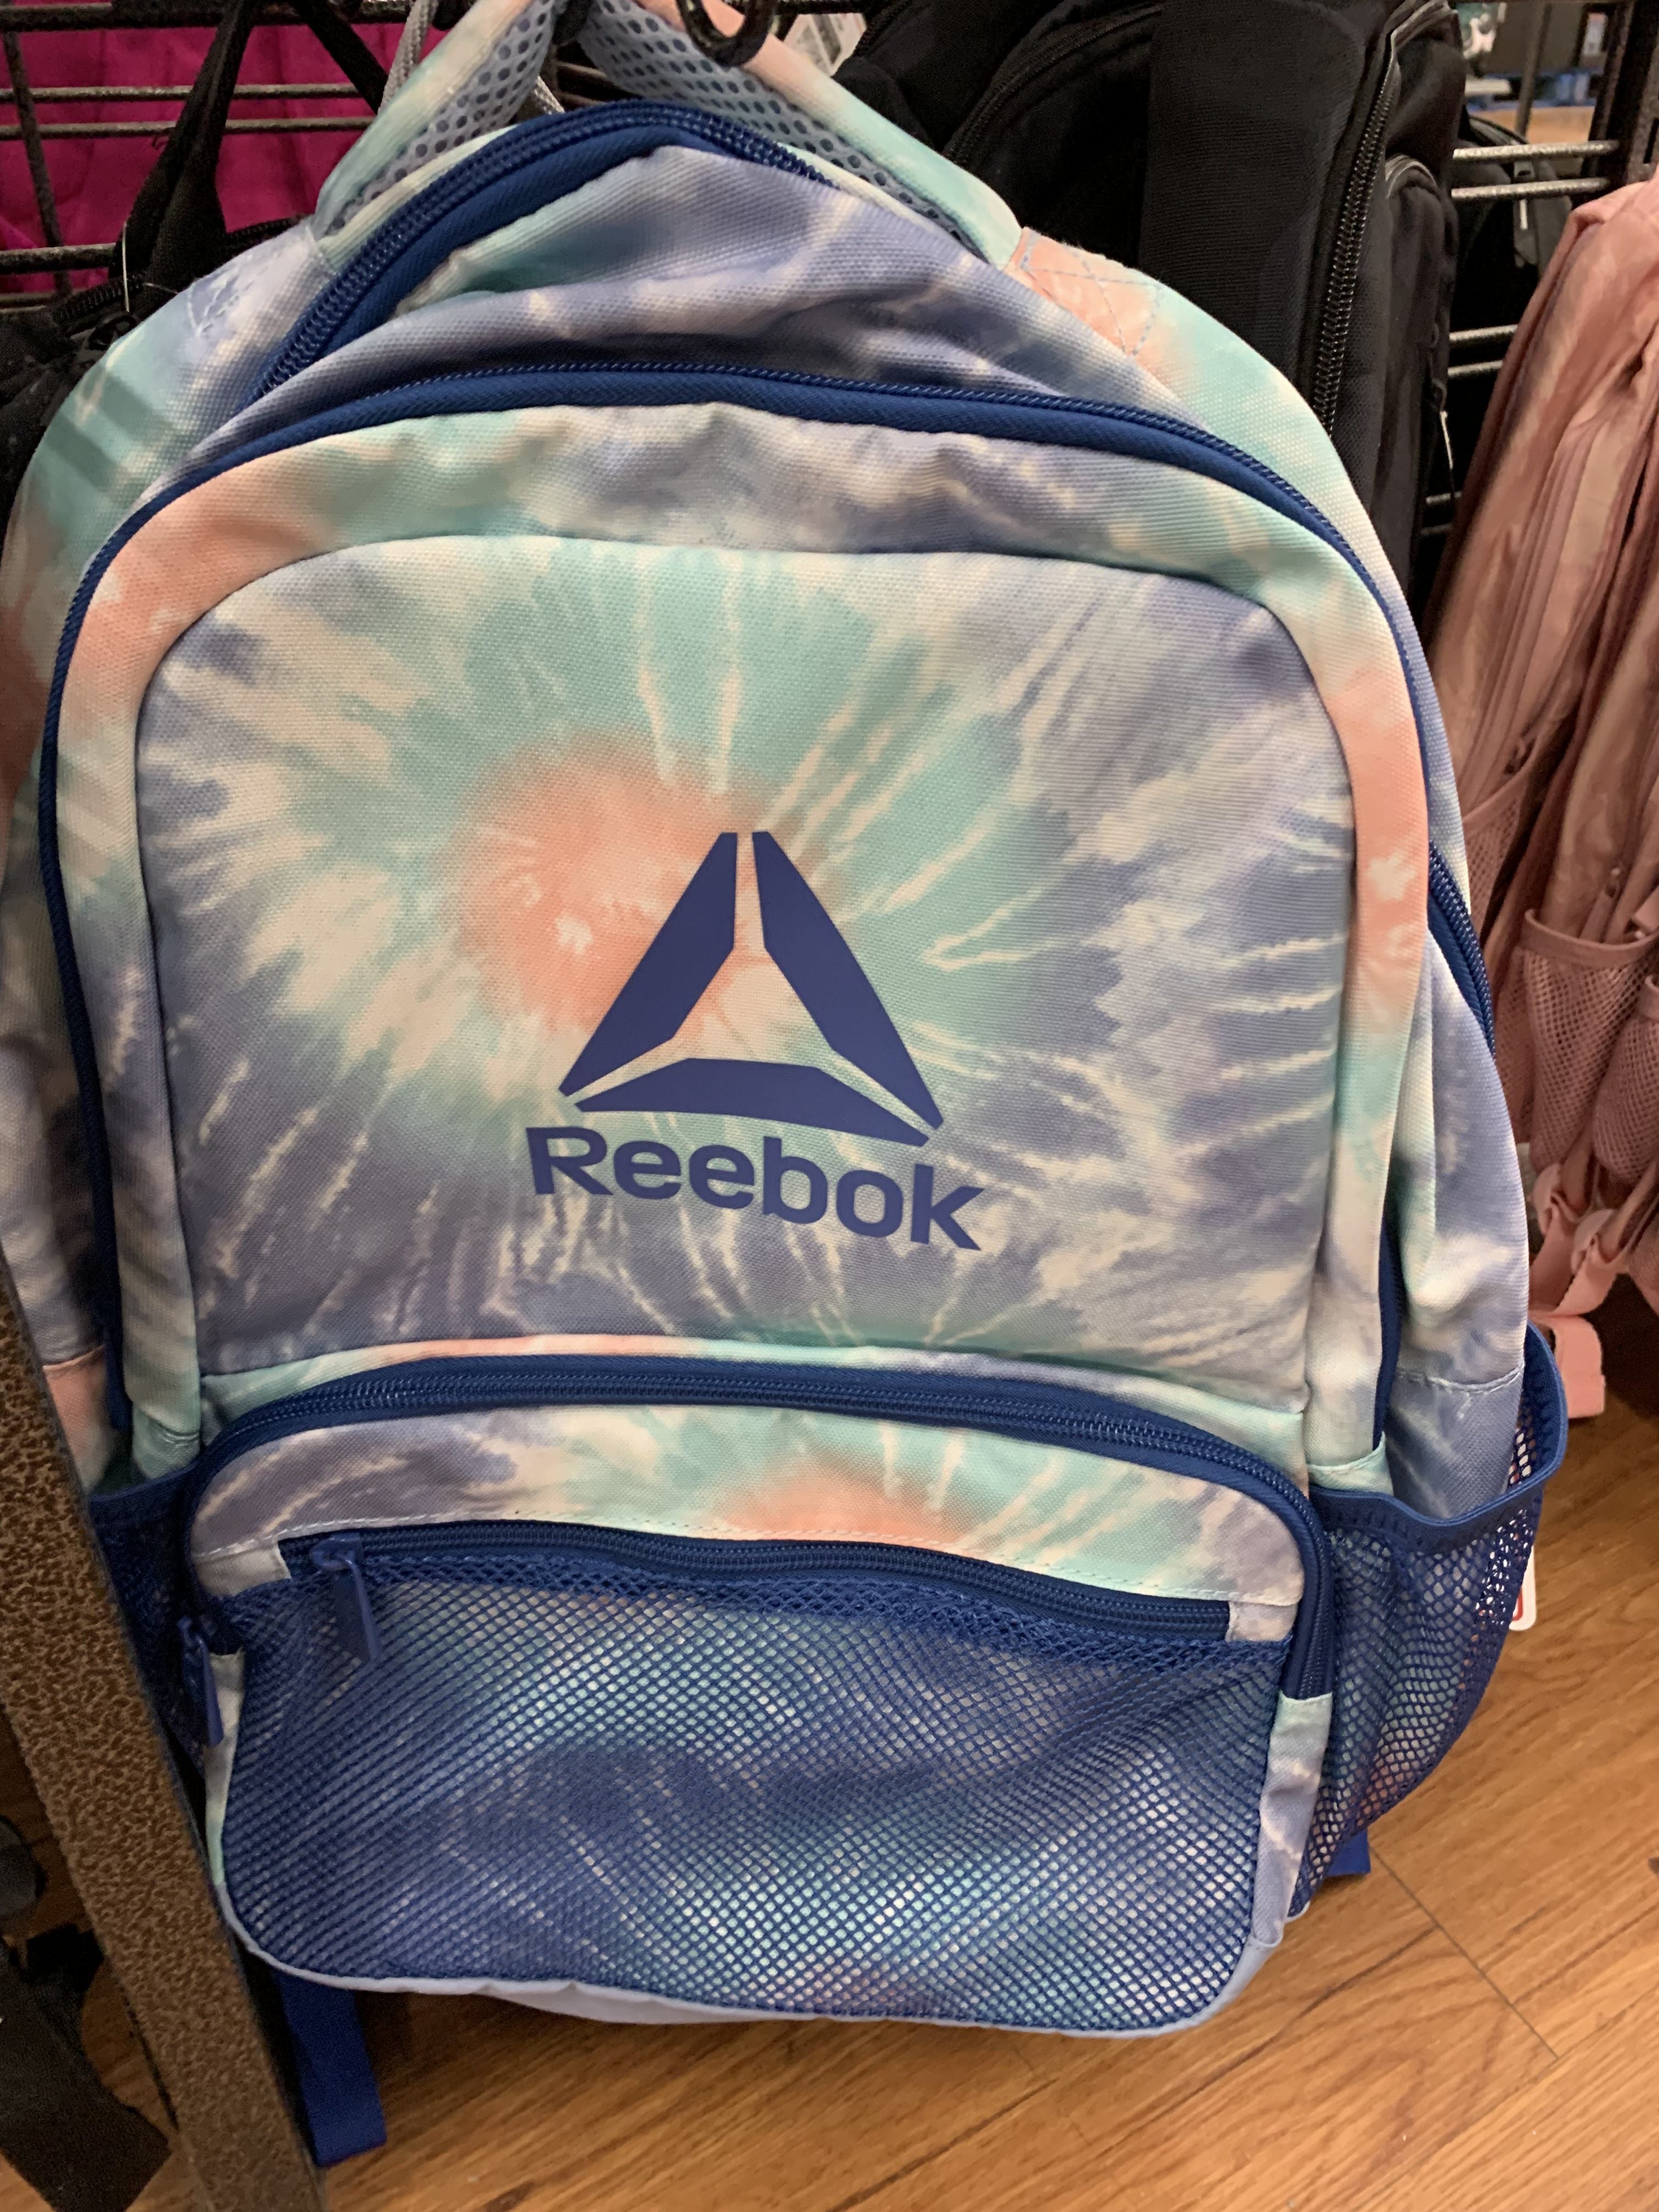 Walmart] Reebok backpack $11 reg $34.97 in store different styles - Forums